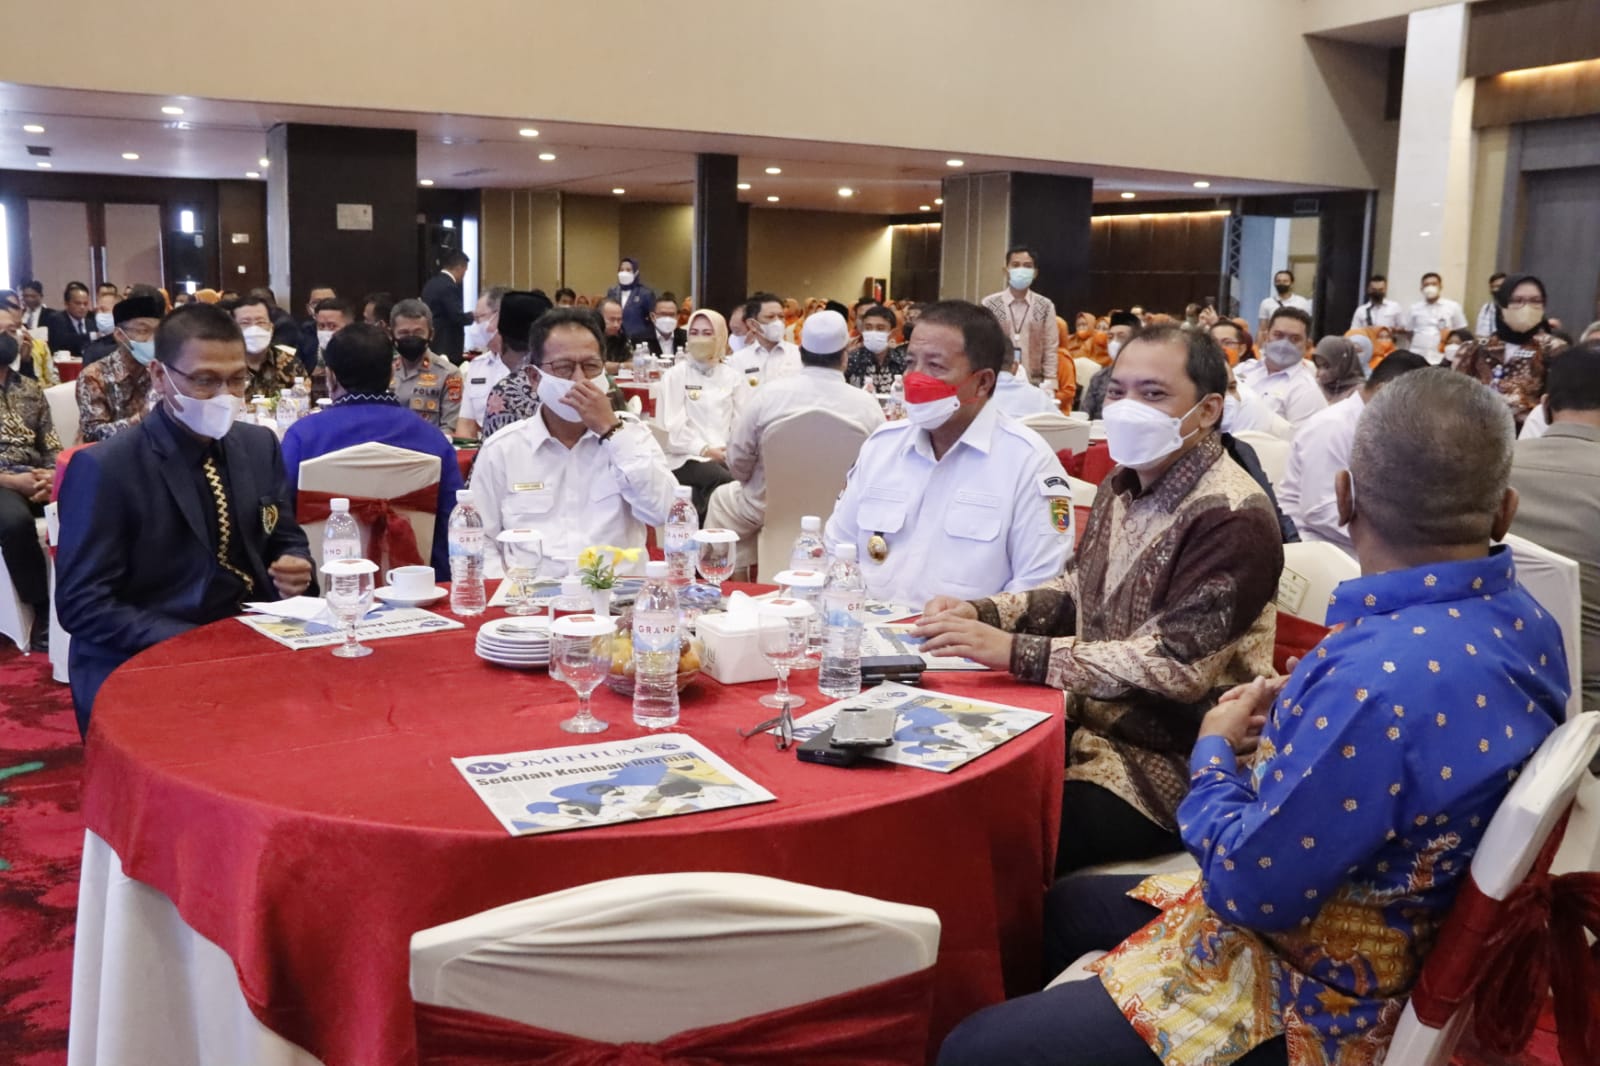 Hadiri Pelantikan Pengurus PWI Lampung, Gubernur : Insan Pers Kekuatan Yang Dapat Membangun Bangsa